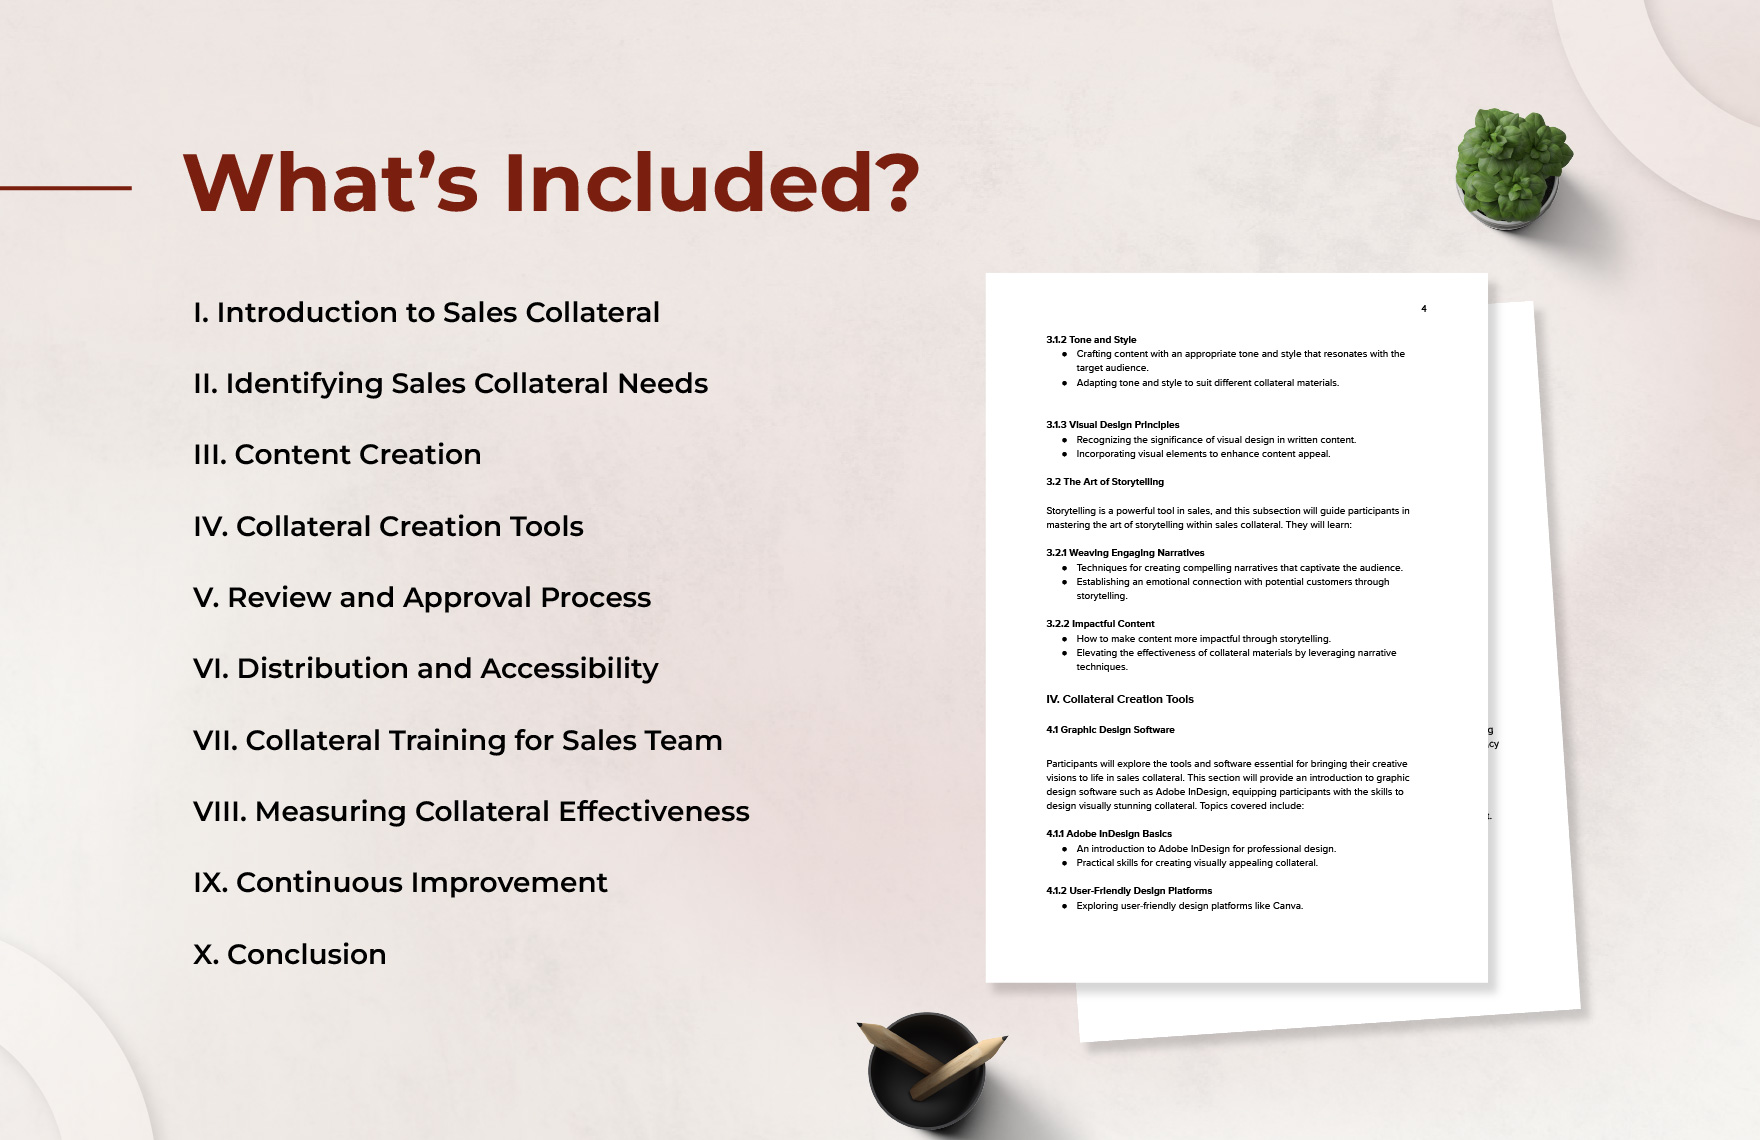 Sales Collateral Development Curriculum Template